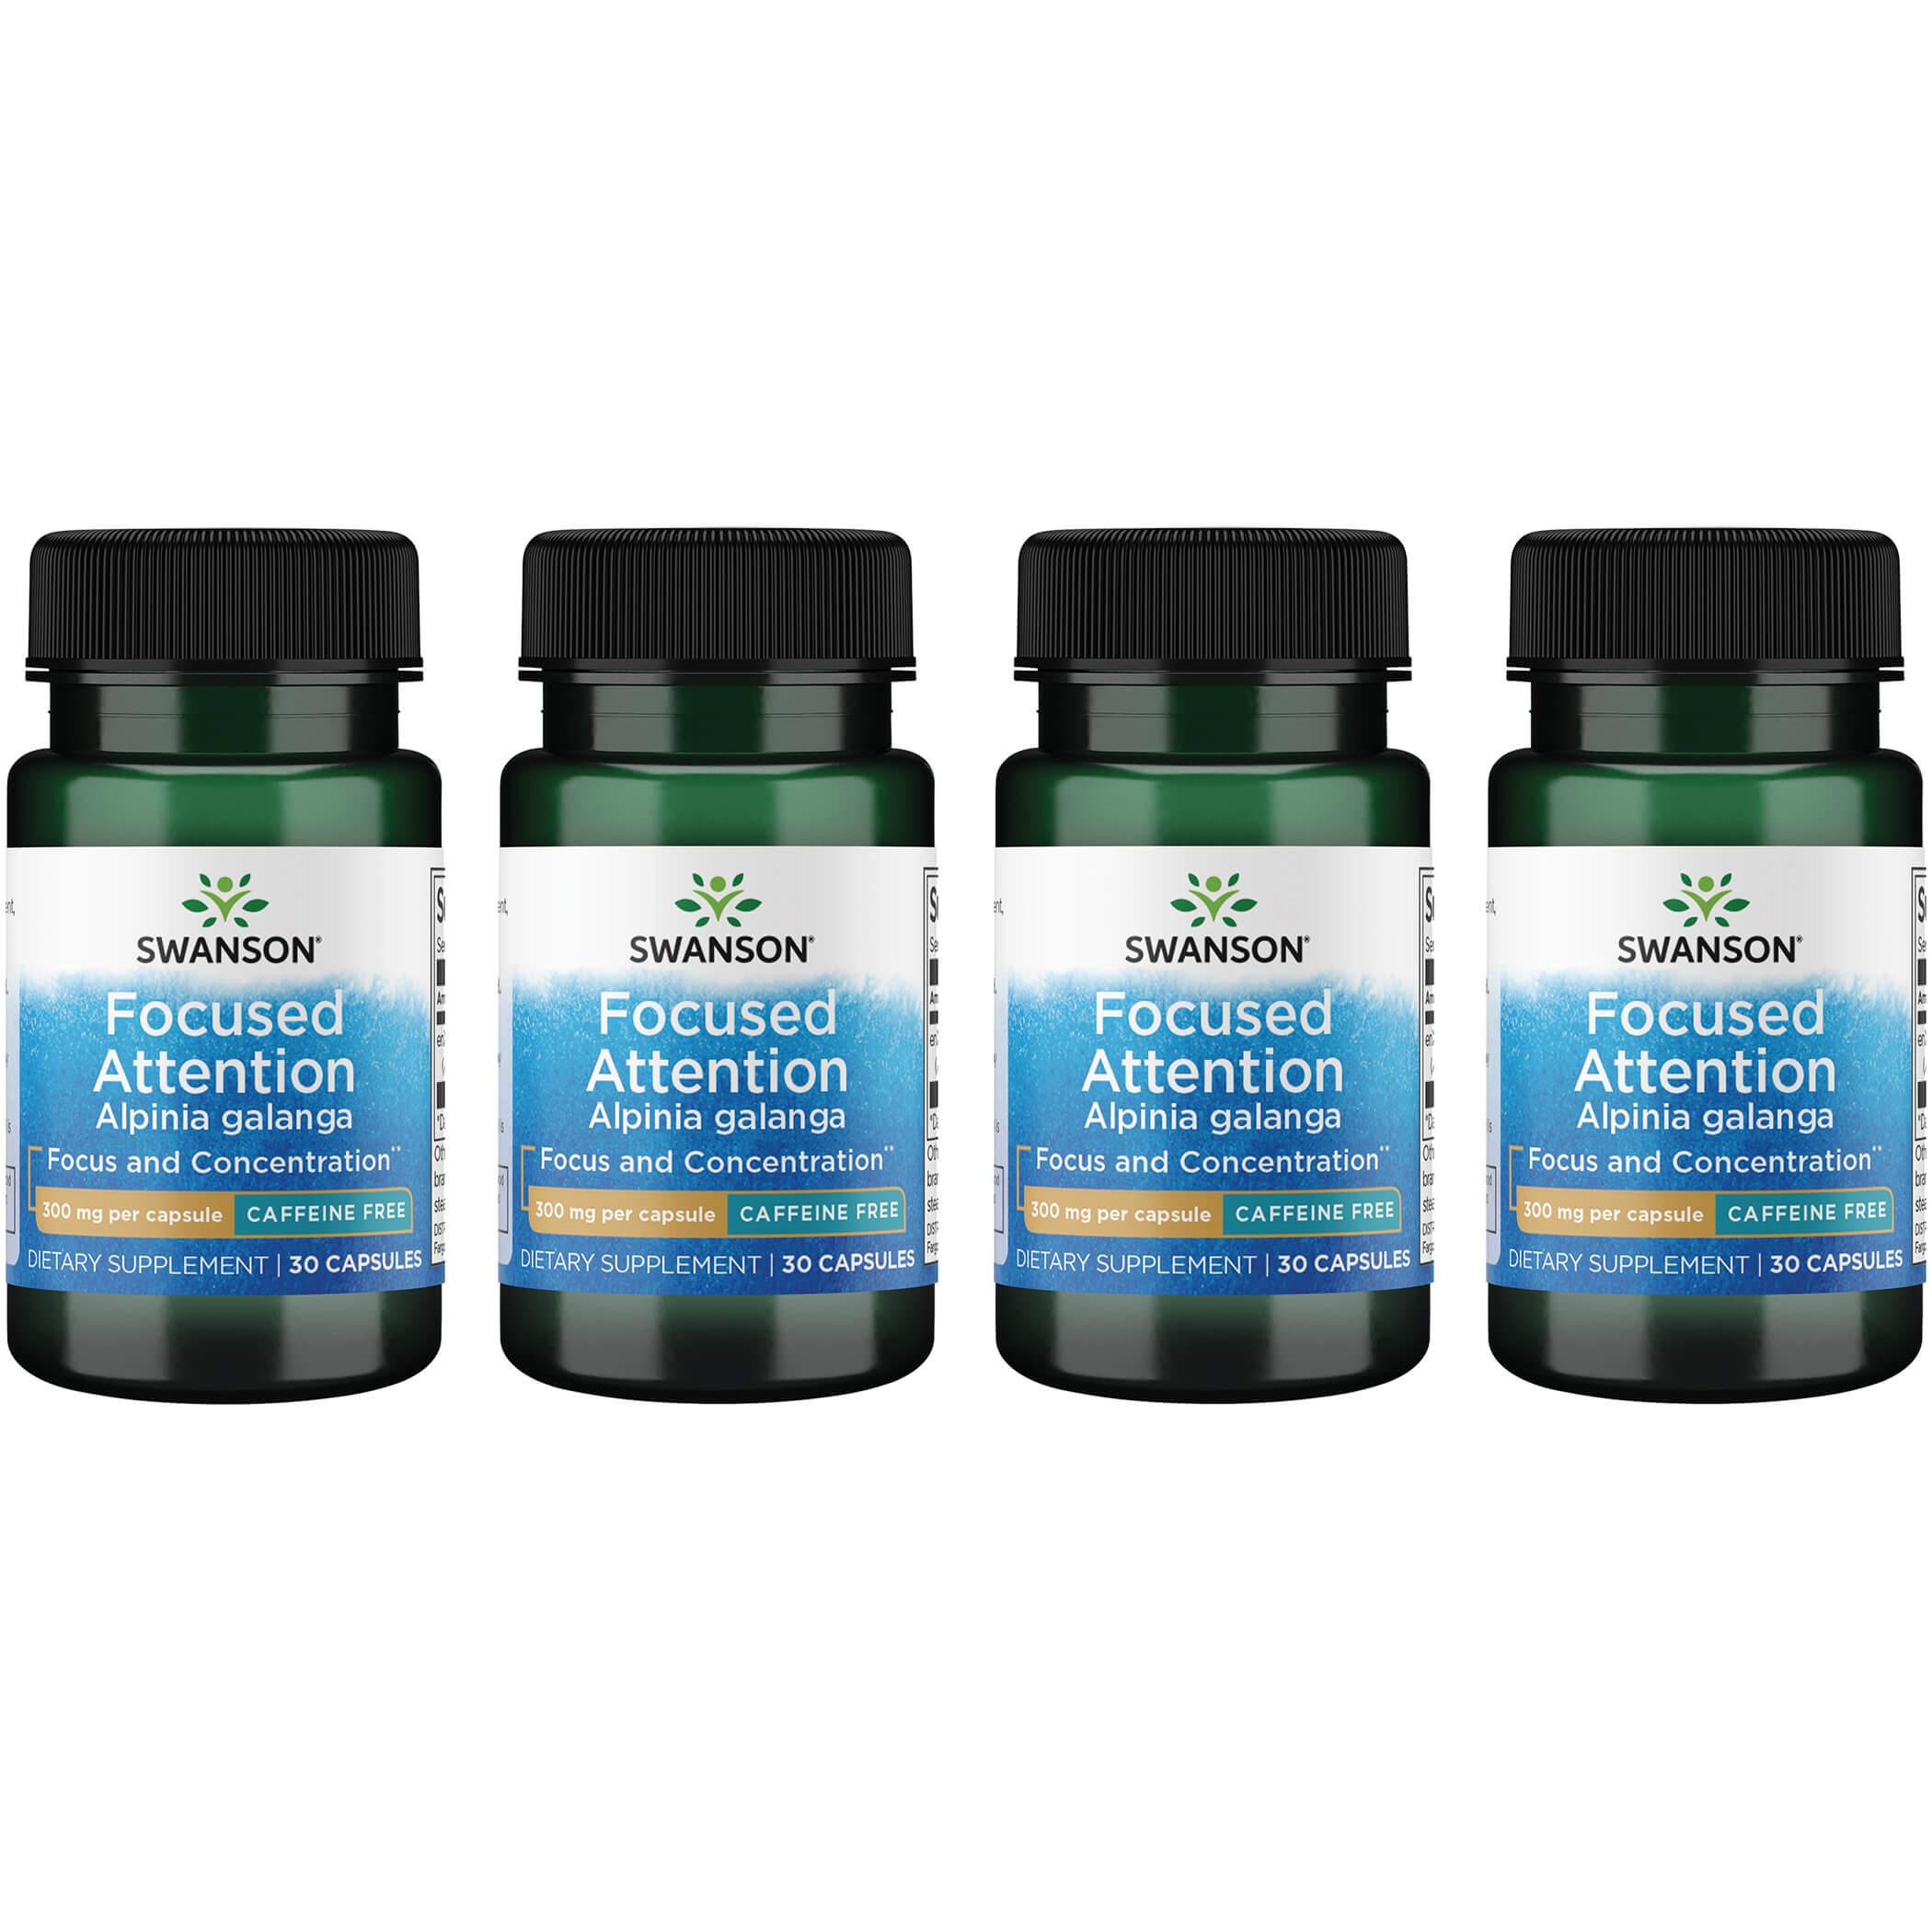 Swanson Premium Focused Attention Alpinia Galanga - Caffeine-Free 4 Pack Vitamin 300 mg 30 Caps